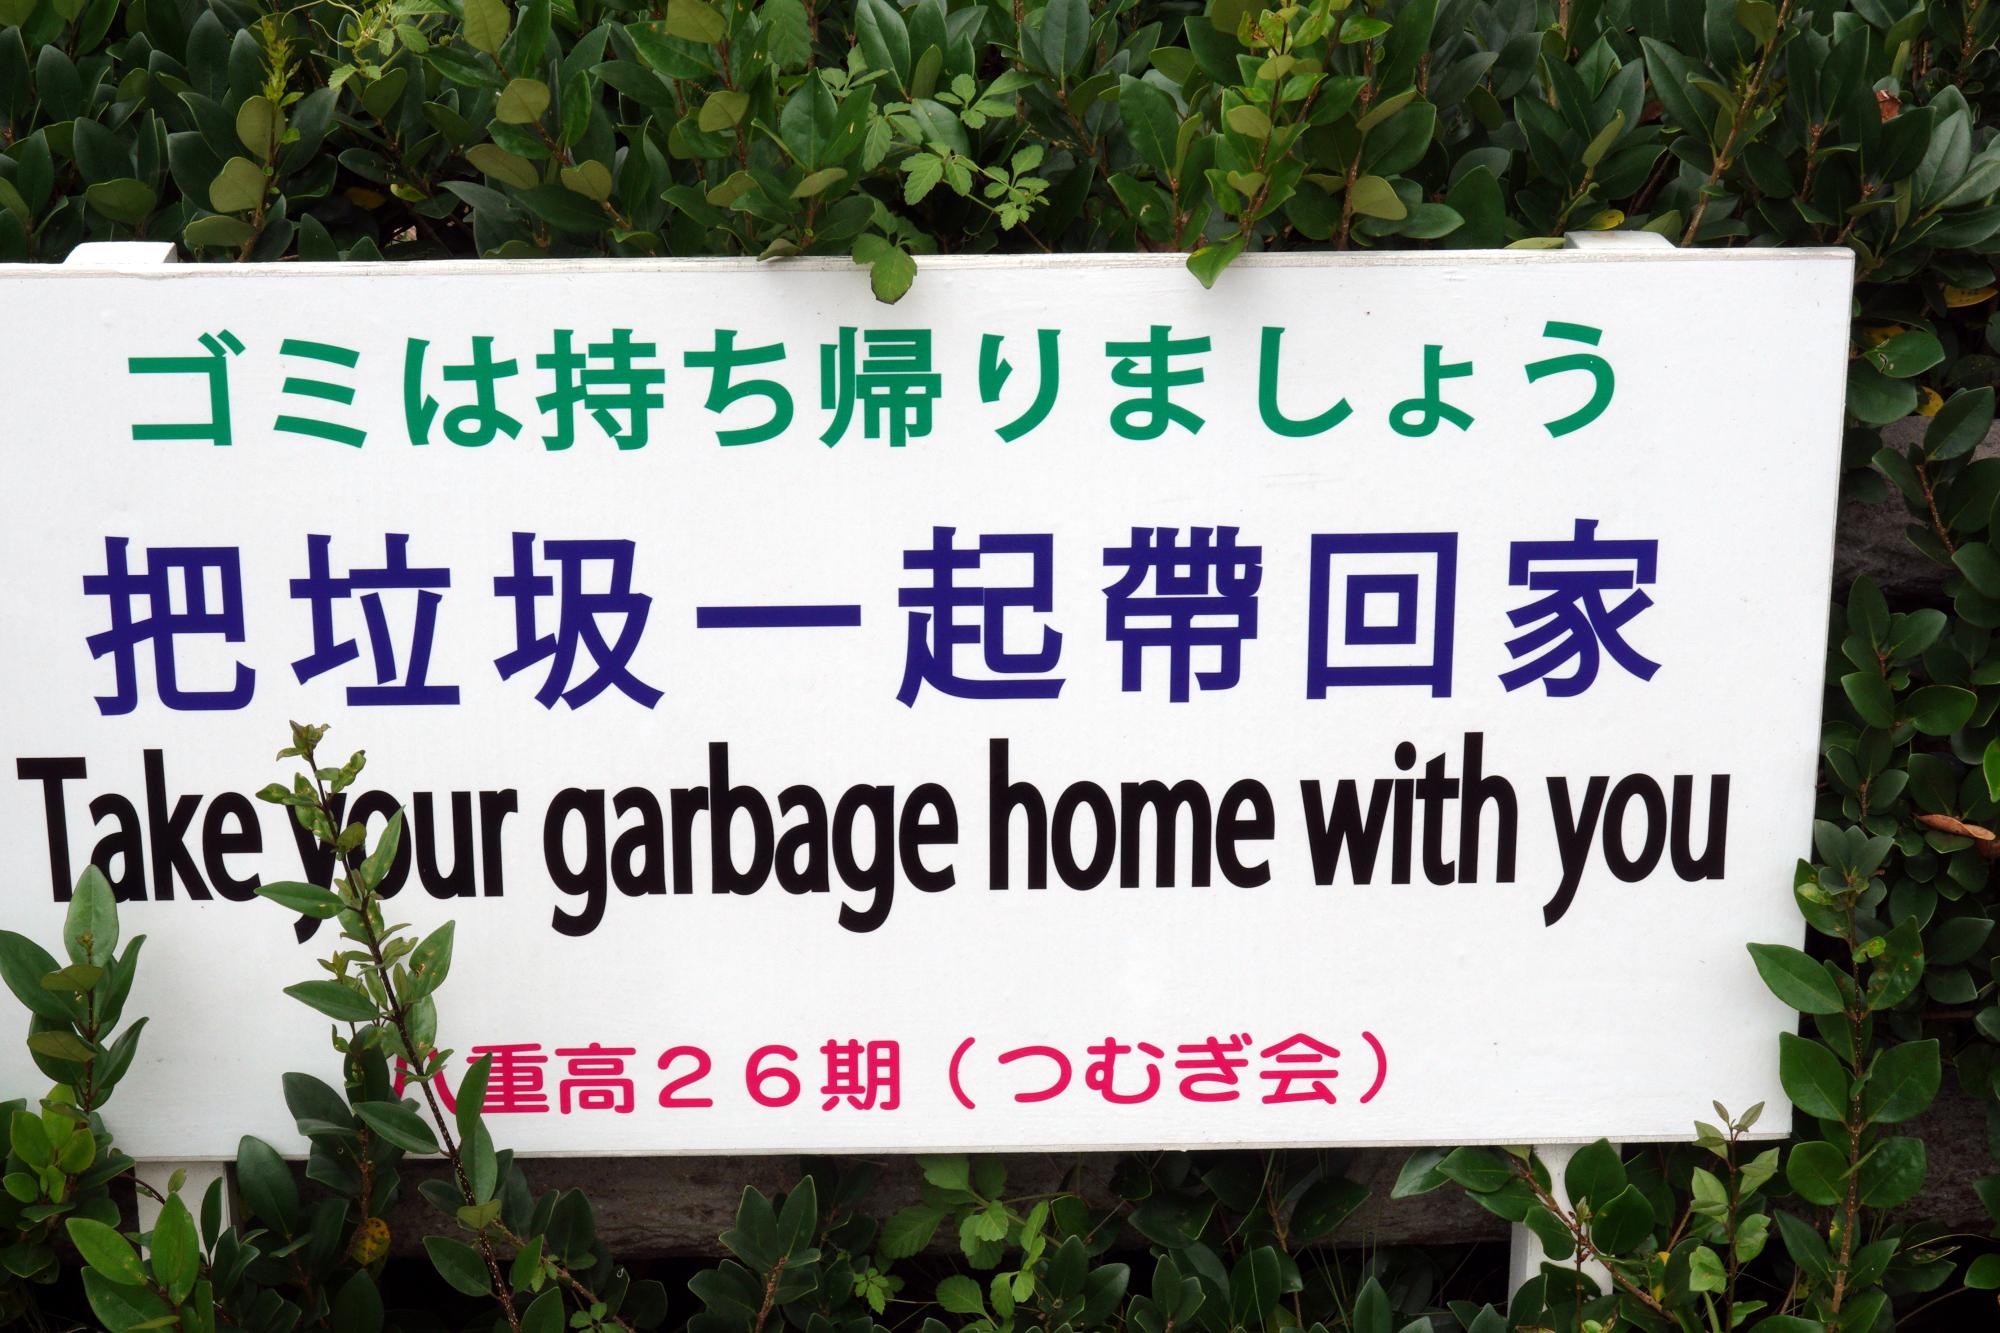 Signs Of Japan - No Trash Cans